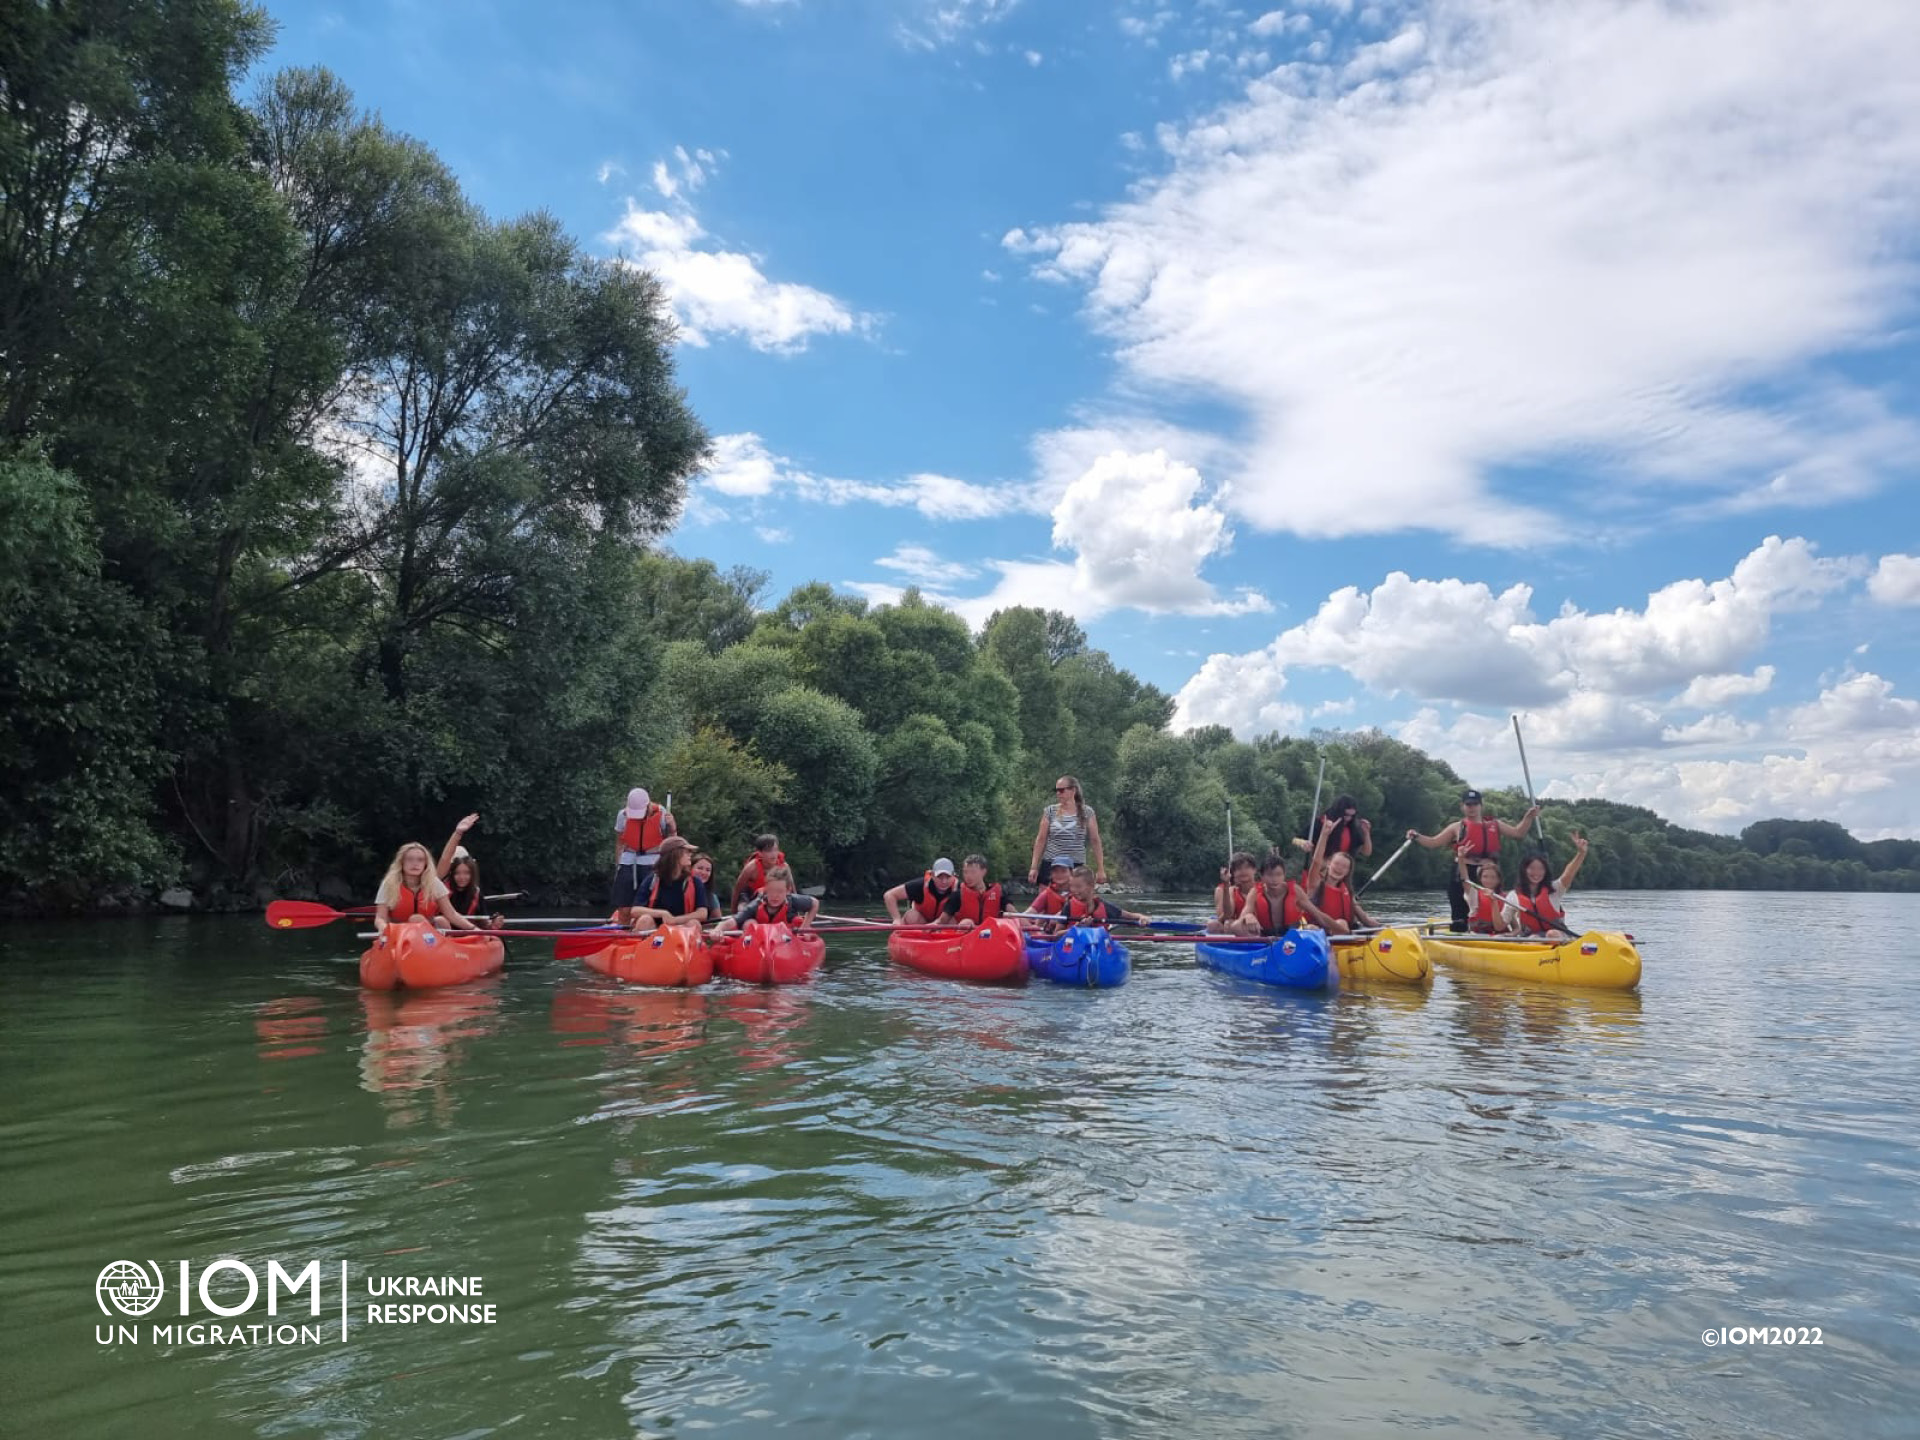 IOM Slovakia rafting trip for children from Ukraine in August 2022. Photo © International Organization for Migration (IOM) 2022. 